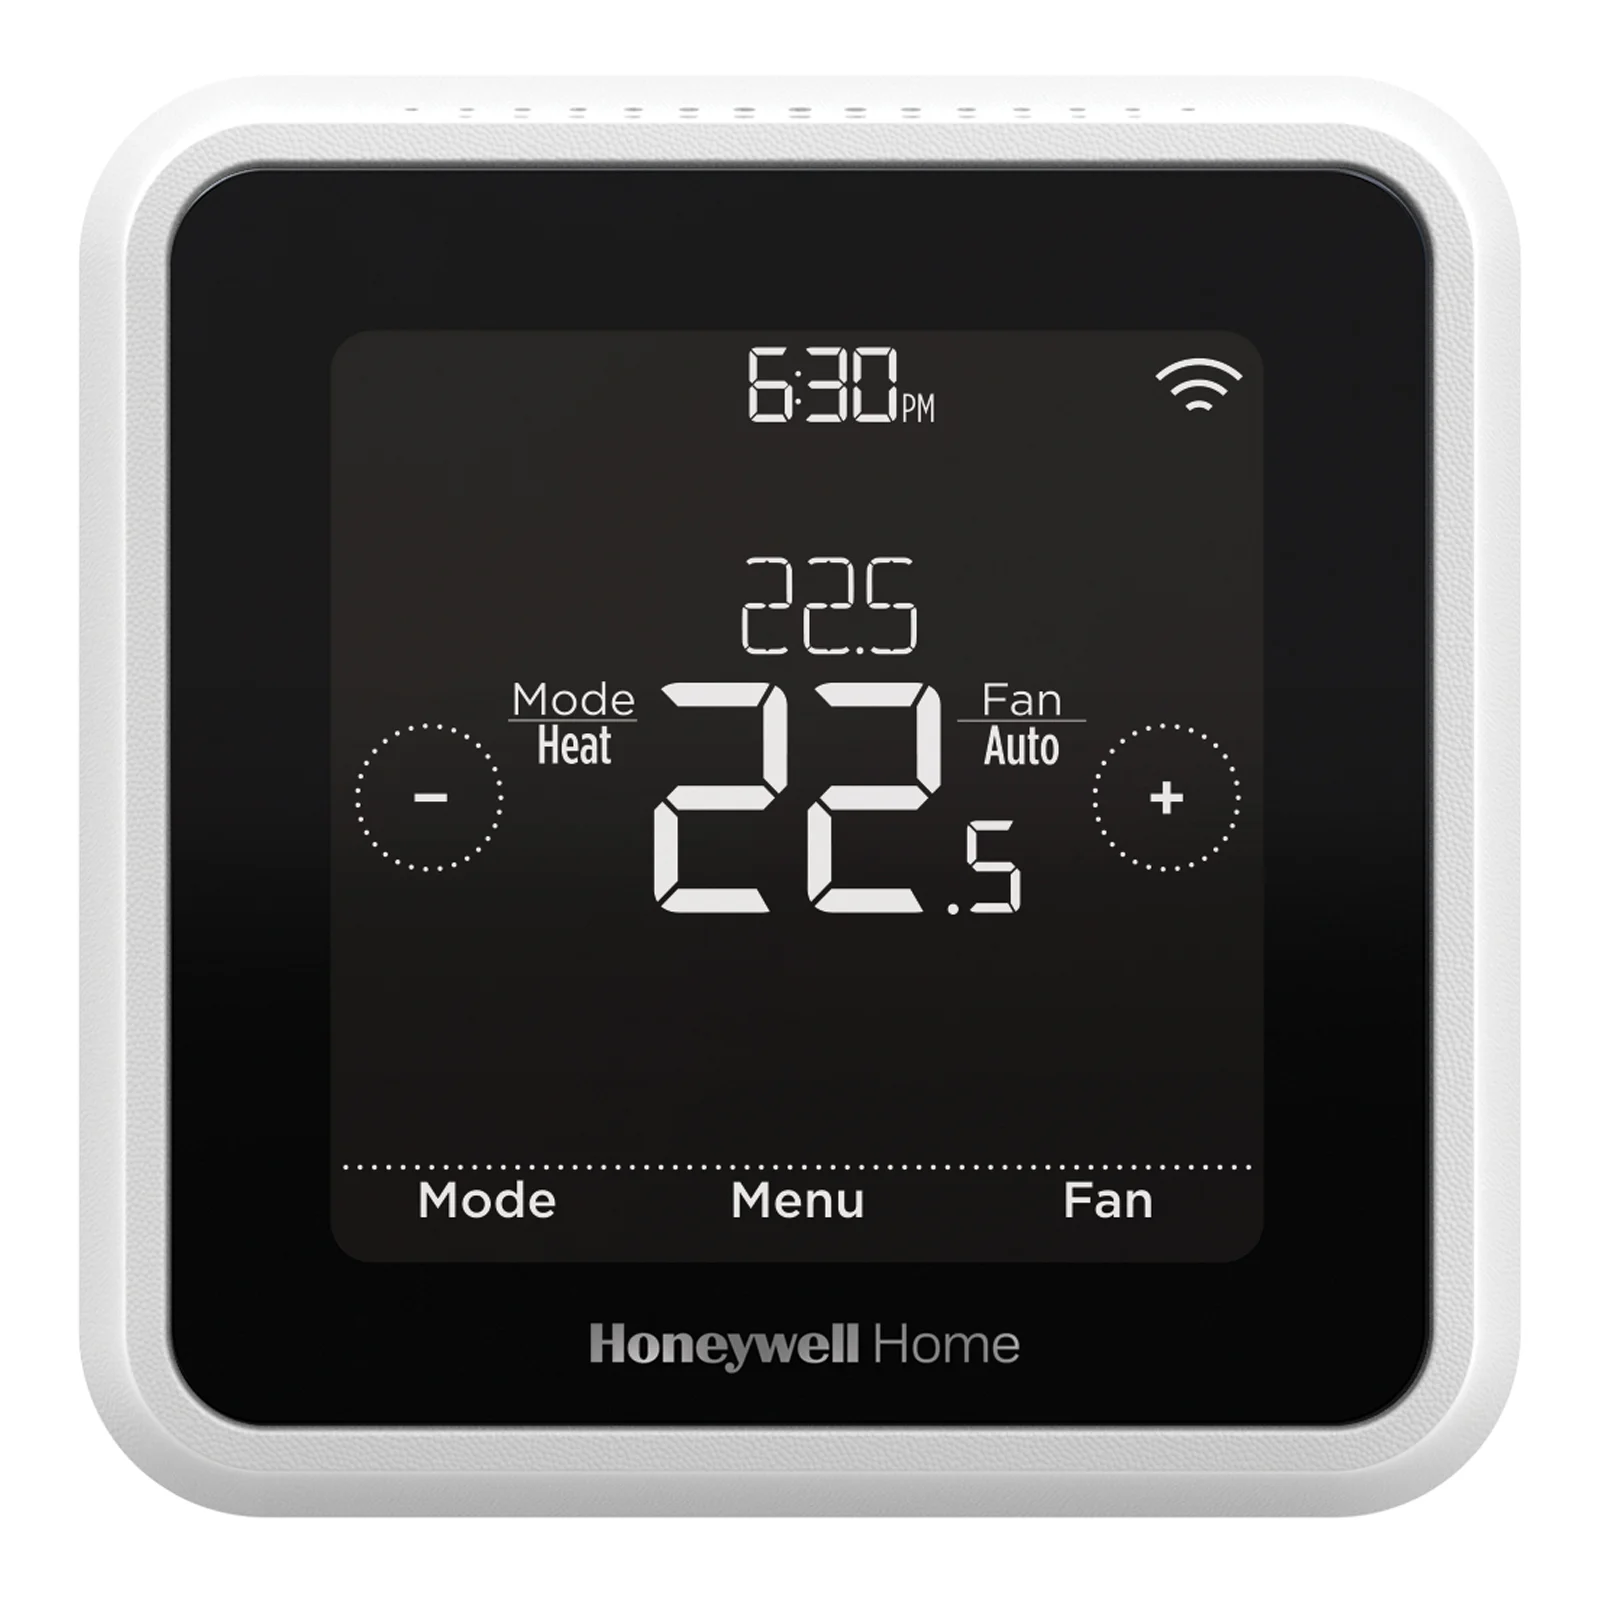 Thermostat intelligent : bonne ou mauvaise idée ? - Wikipower